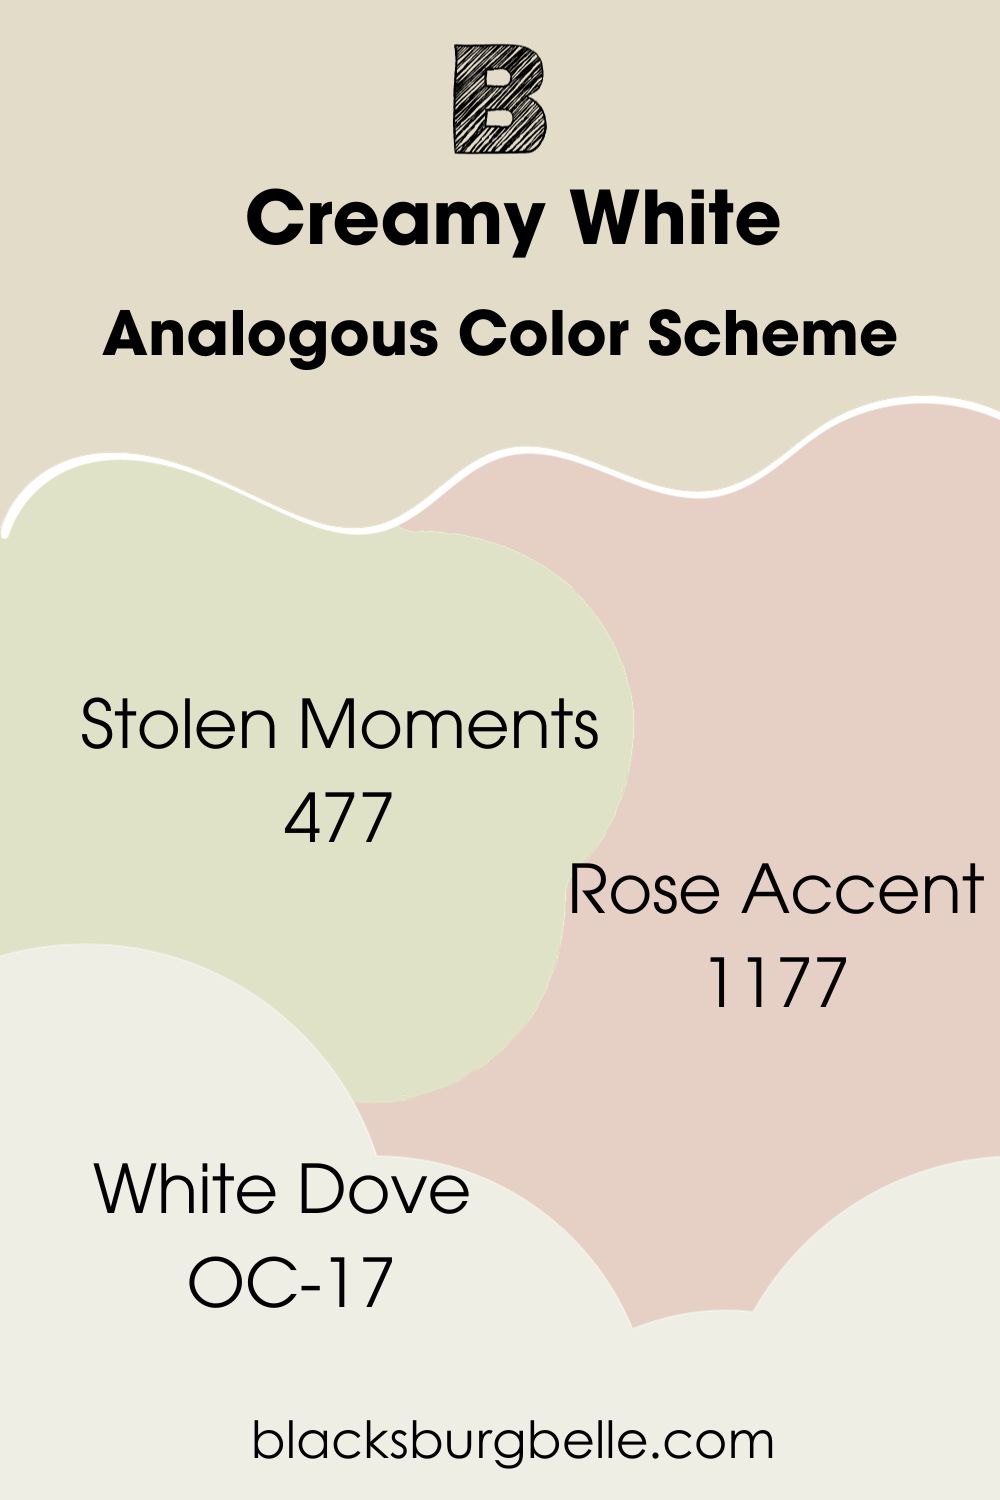  Analogous Color Scheme